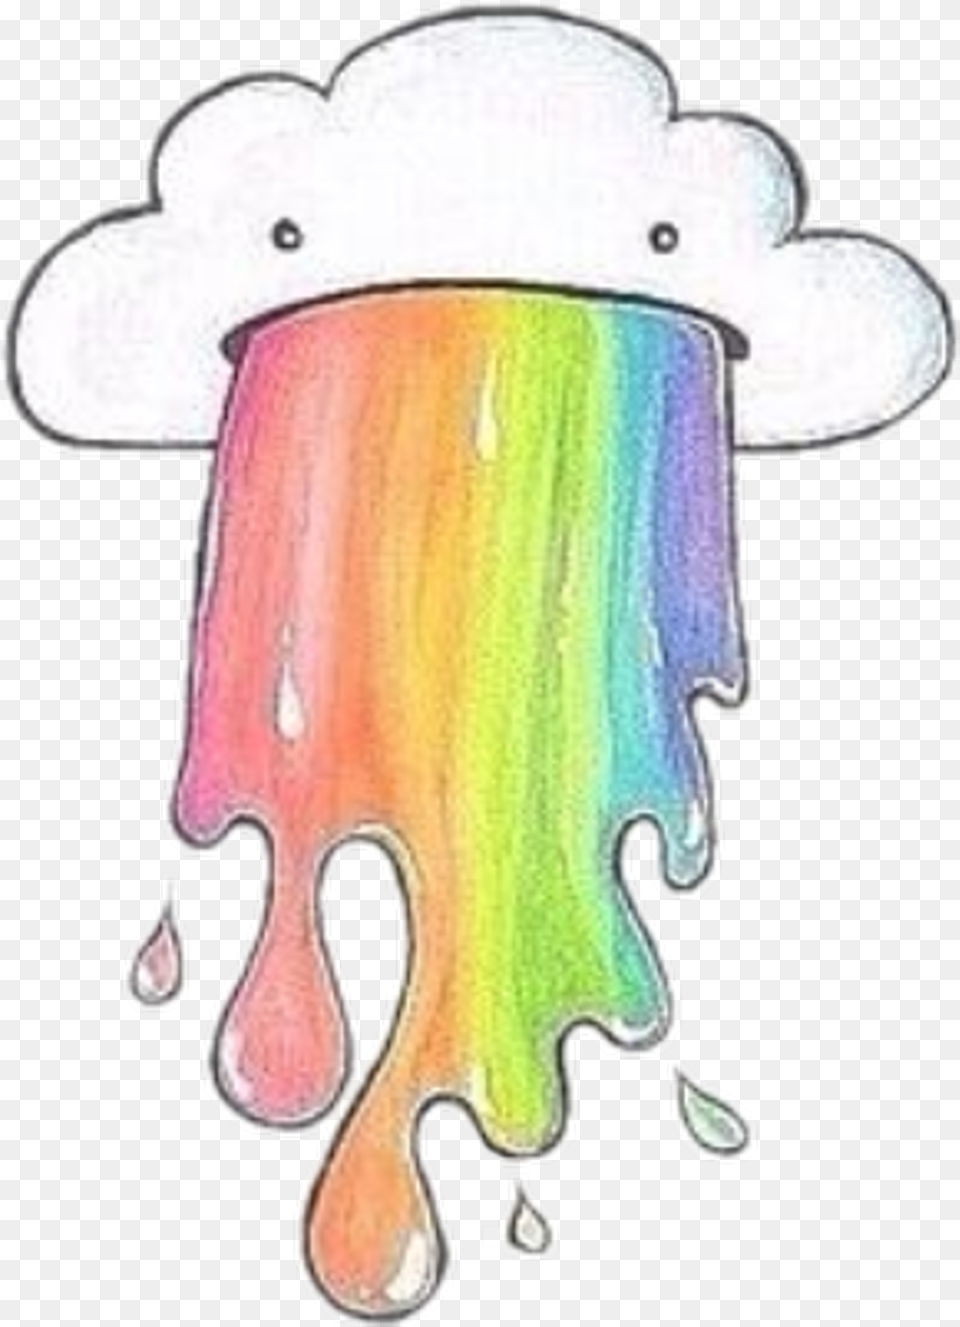 Cloud Rainbow Rain Cute Kawaii Aesthetic Tumblr Full Drawing Ideas For Kids Age 10, Animal, Sea Life, Invertebrate, Jellyfish Png